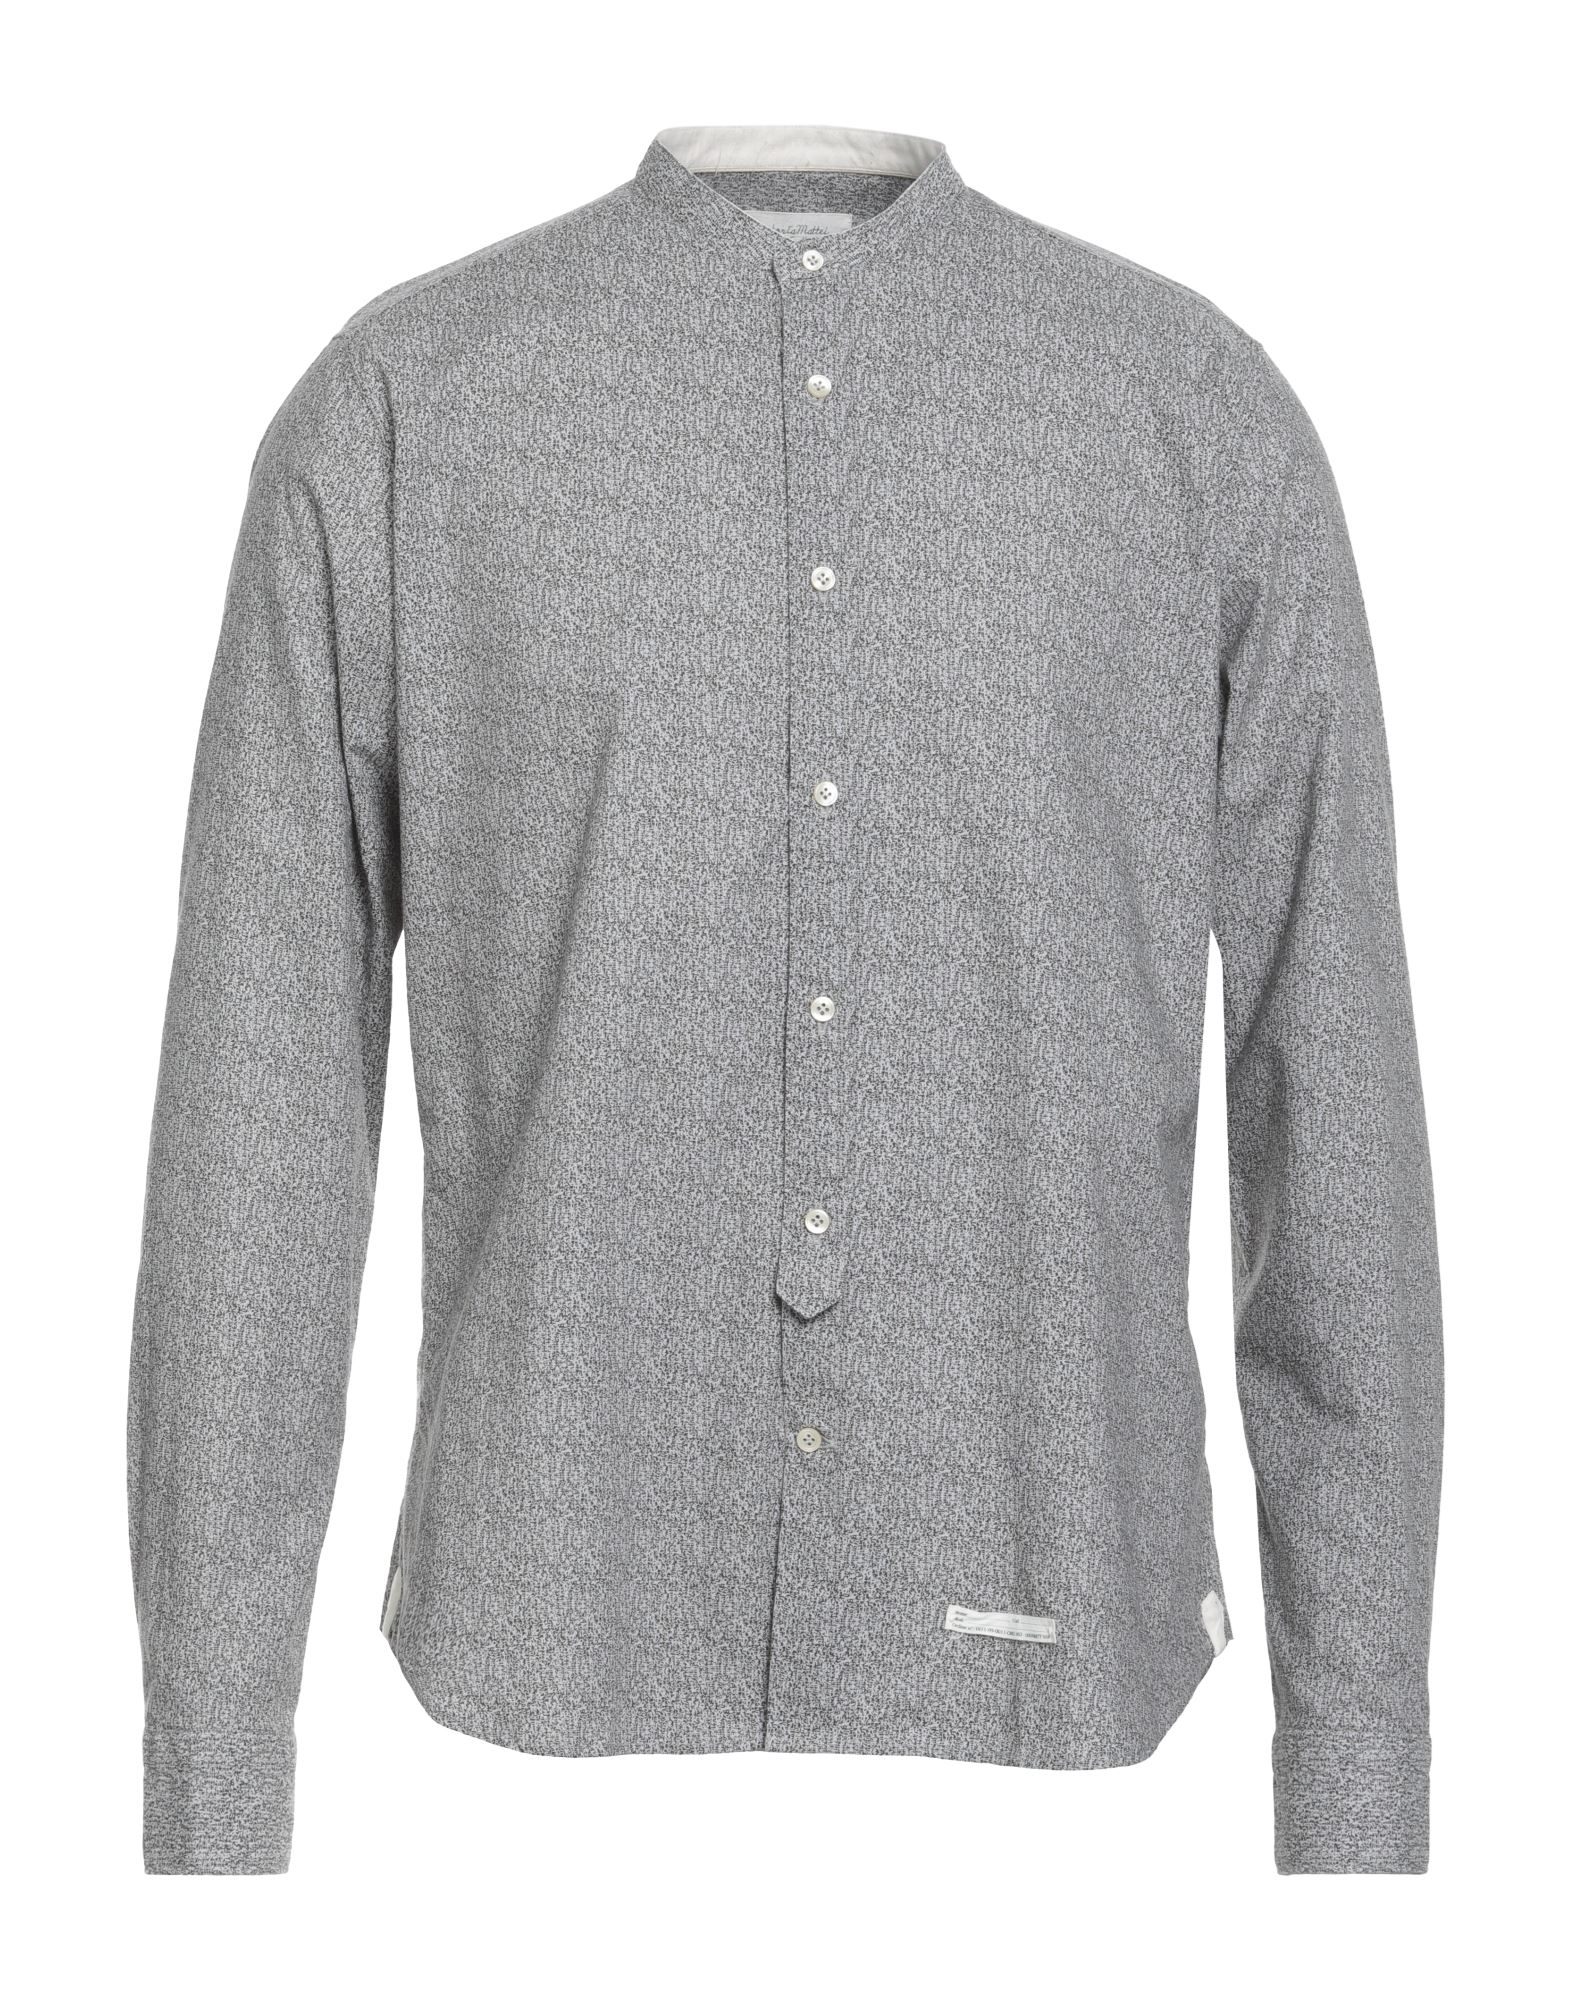 Tintoria Mattei 954 Shirts In Grey